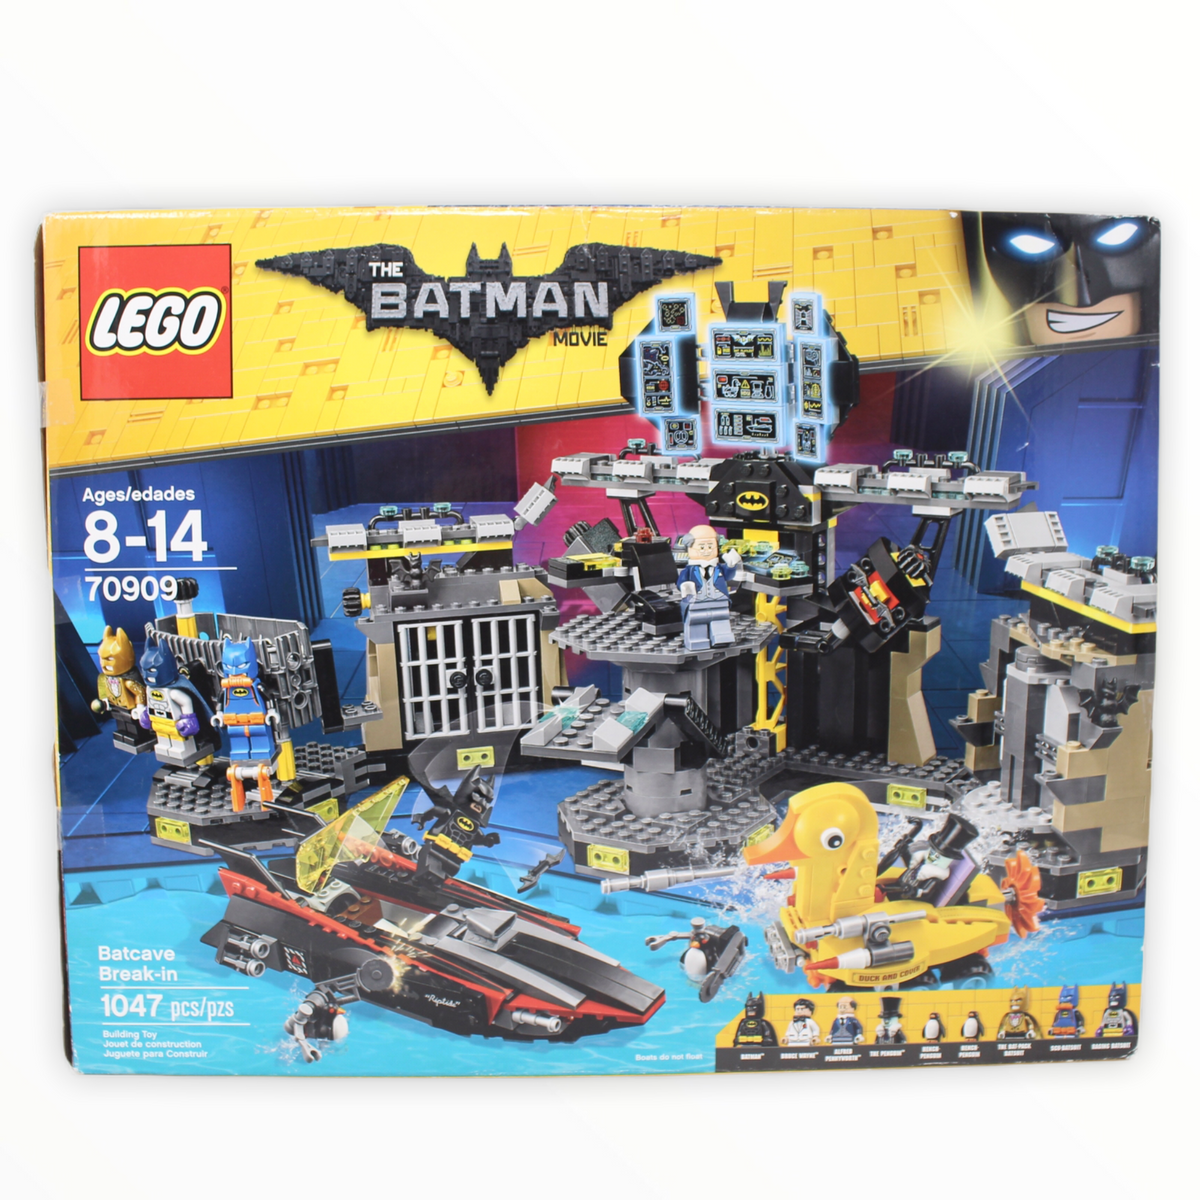 LEGO Batman Movie Set 70909 Batcave Break-in Used 99% Complete w/ Figs, Box